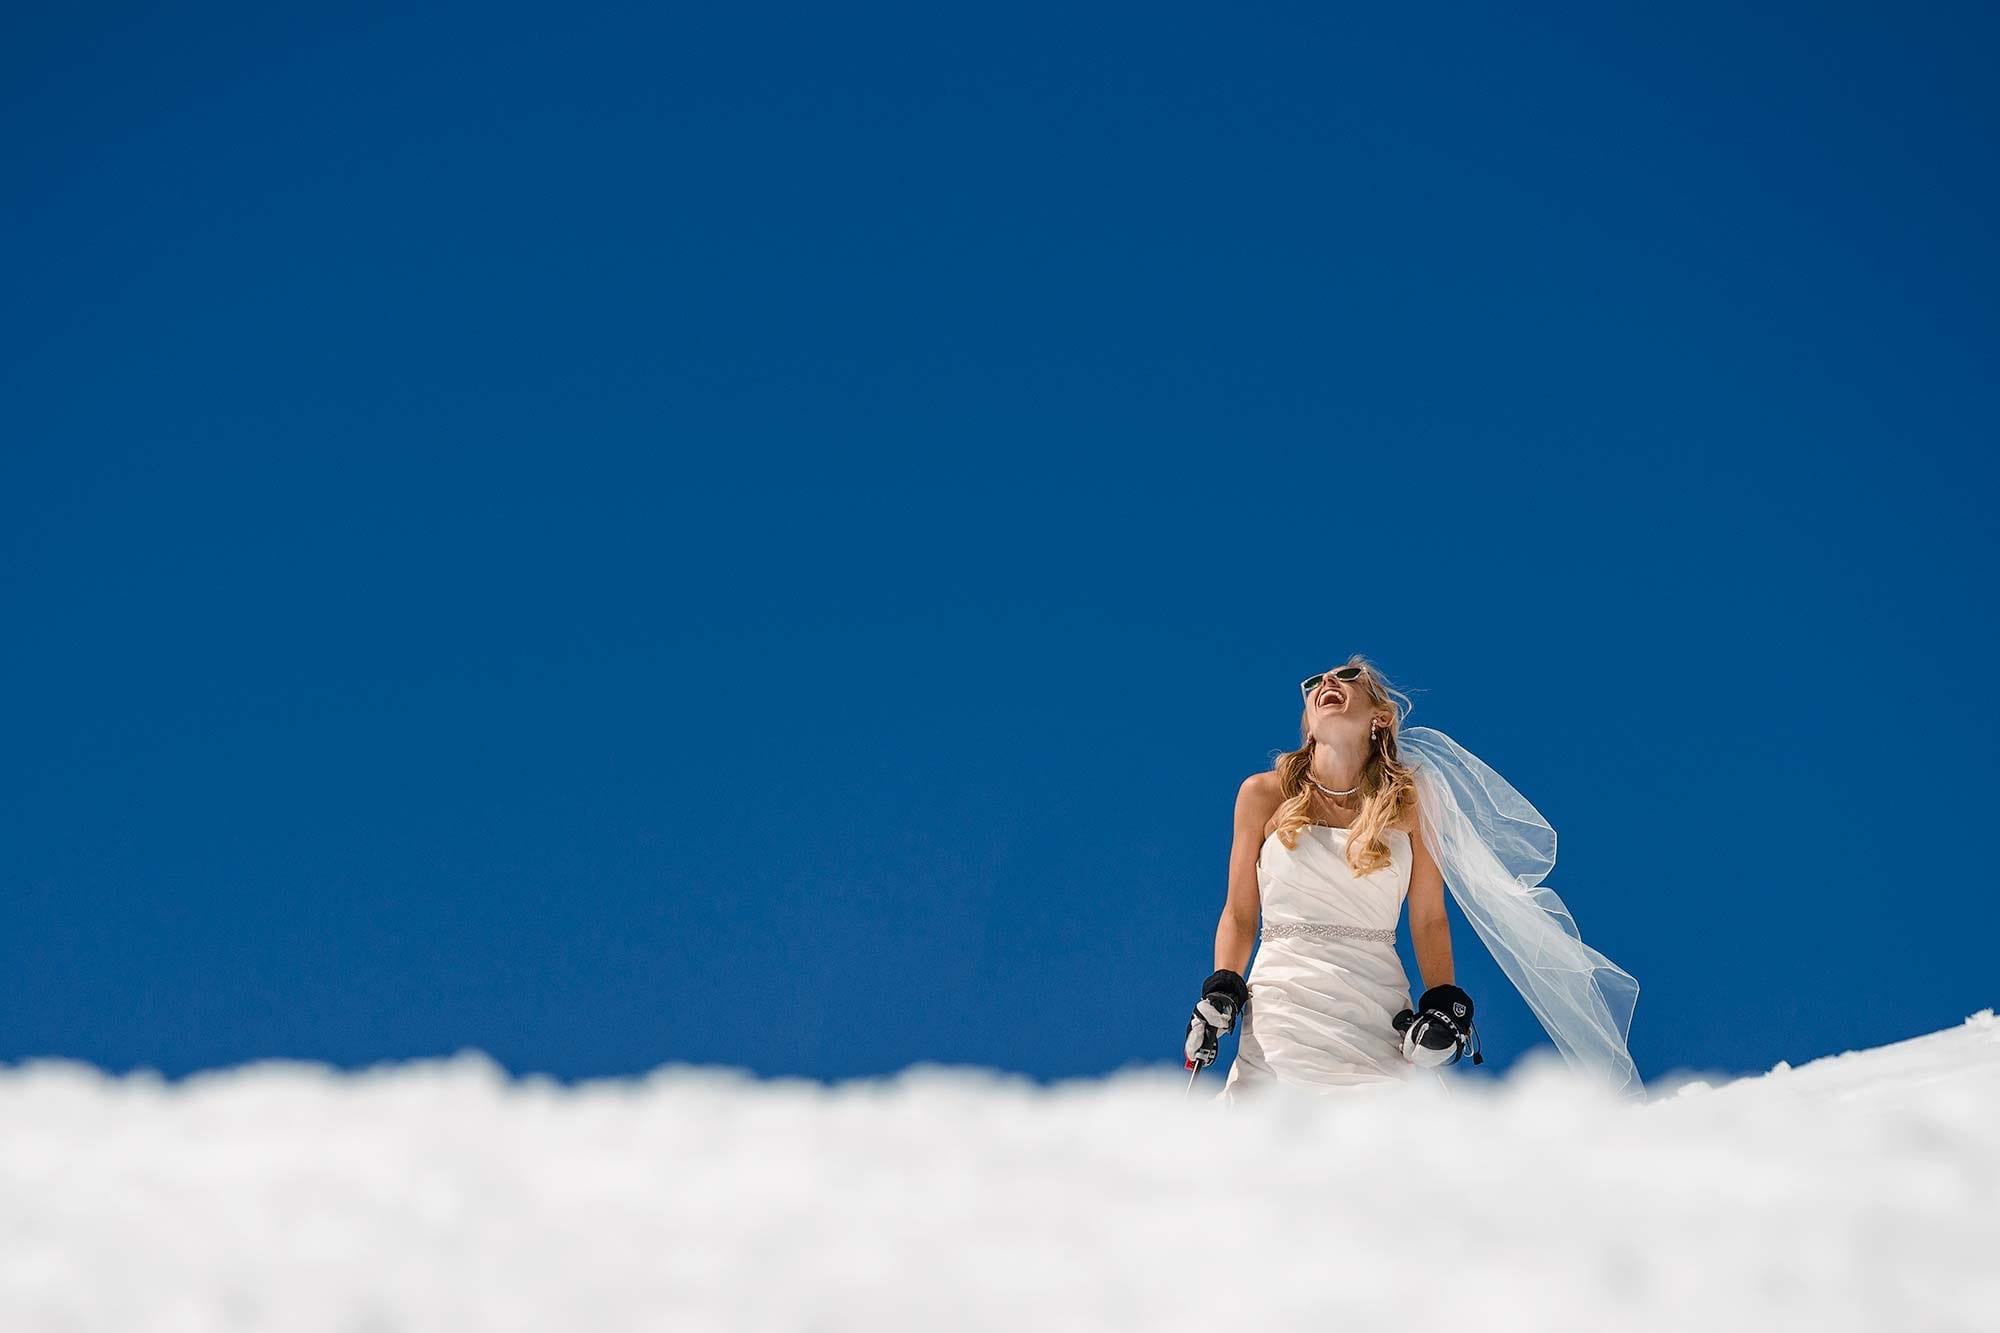 Photograph of skiing bride during a spring ski day at Palisades Tahoe Ski Resort wedding near Lake Tahoe, California. Photography by Monique, Lake Tahoe wedding photographer.